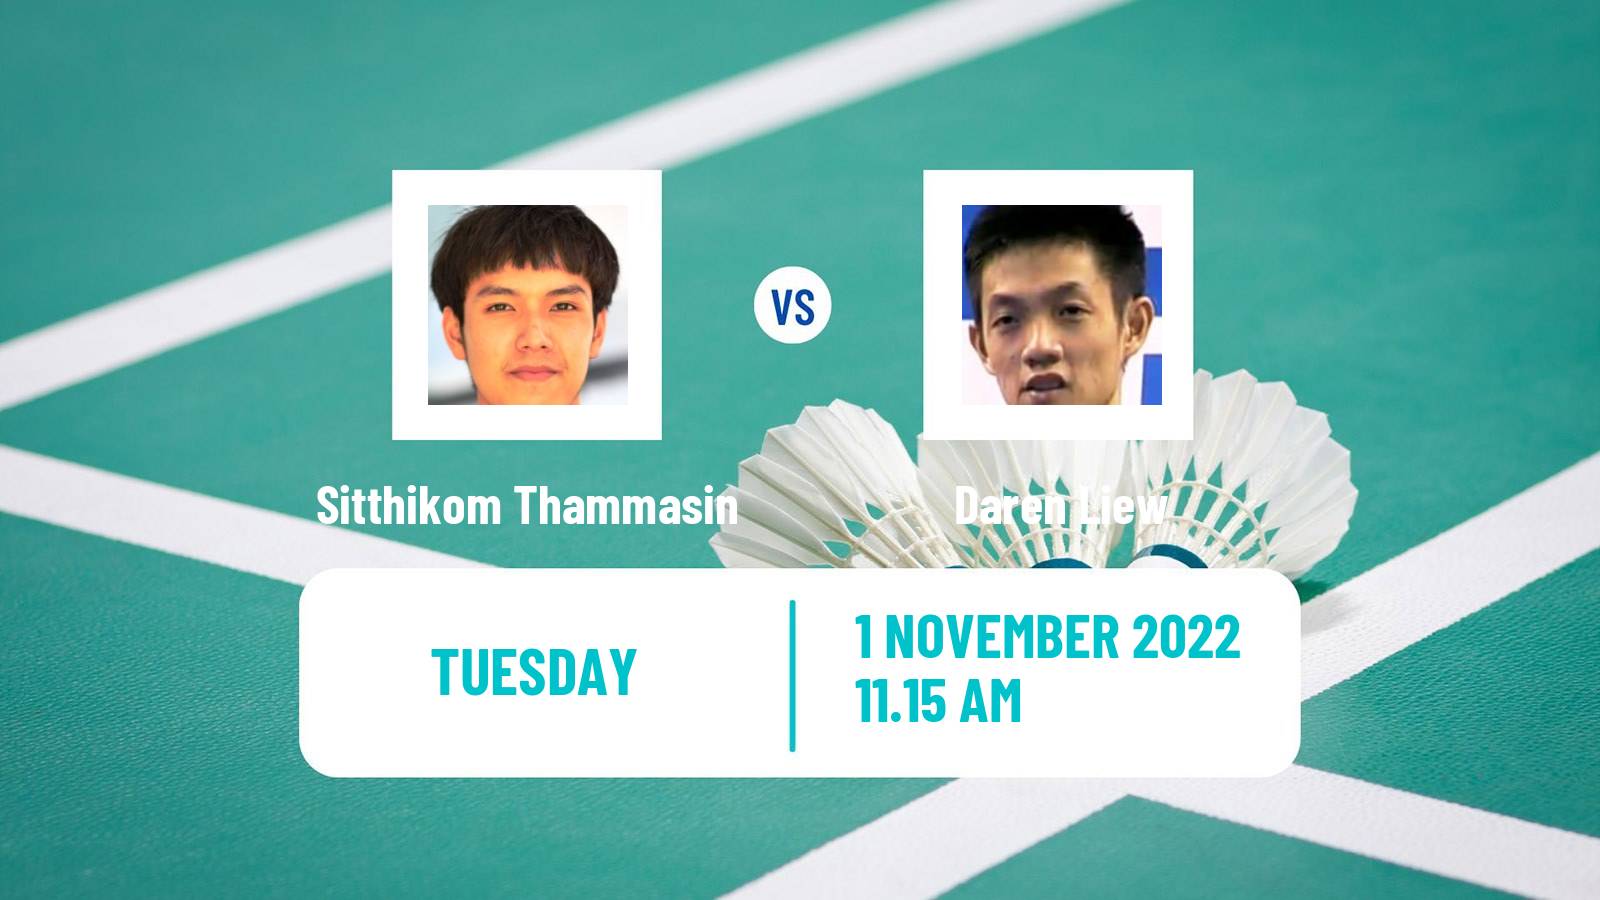 Badminton Badminton Sitthikom Thammasin - Daren Liew